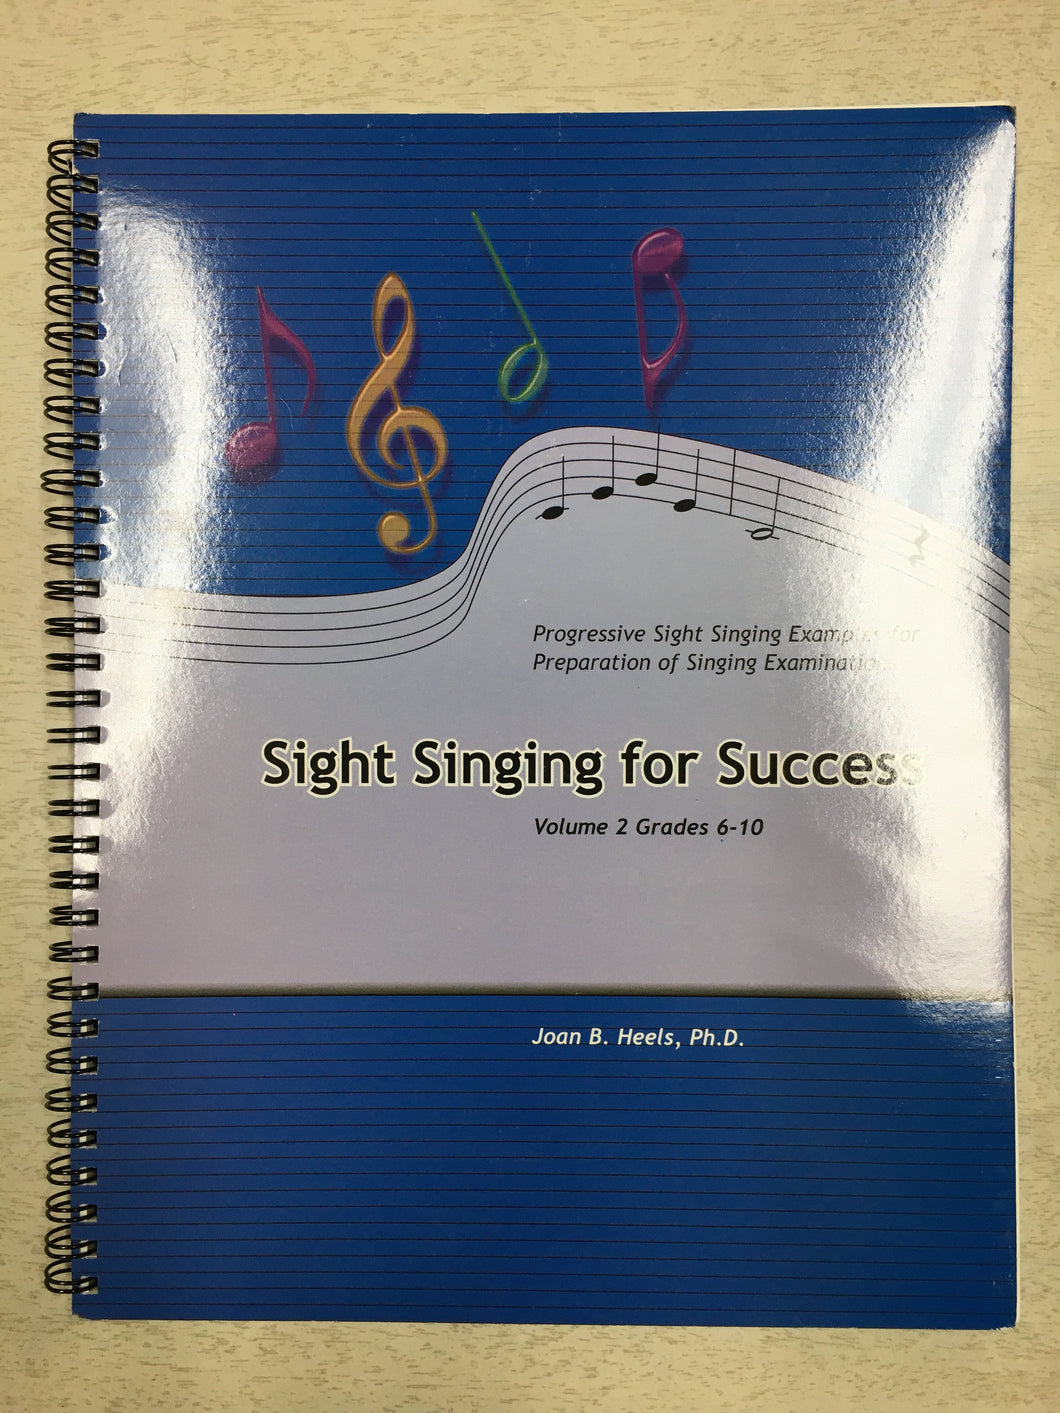 Sight Singing for Success Vol. 2 Grades 6-10, Joan B. Heels